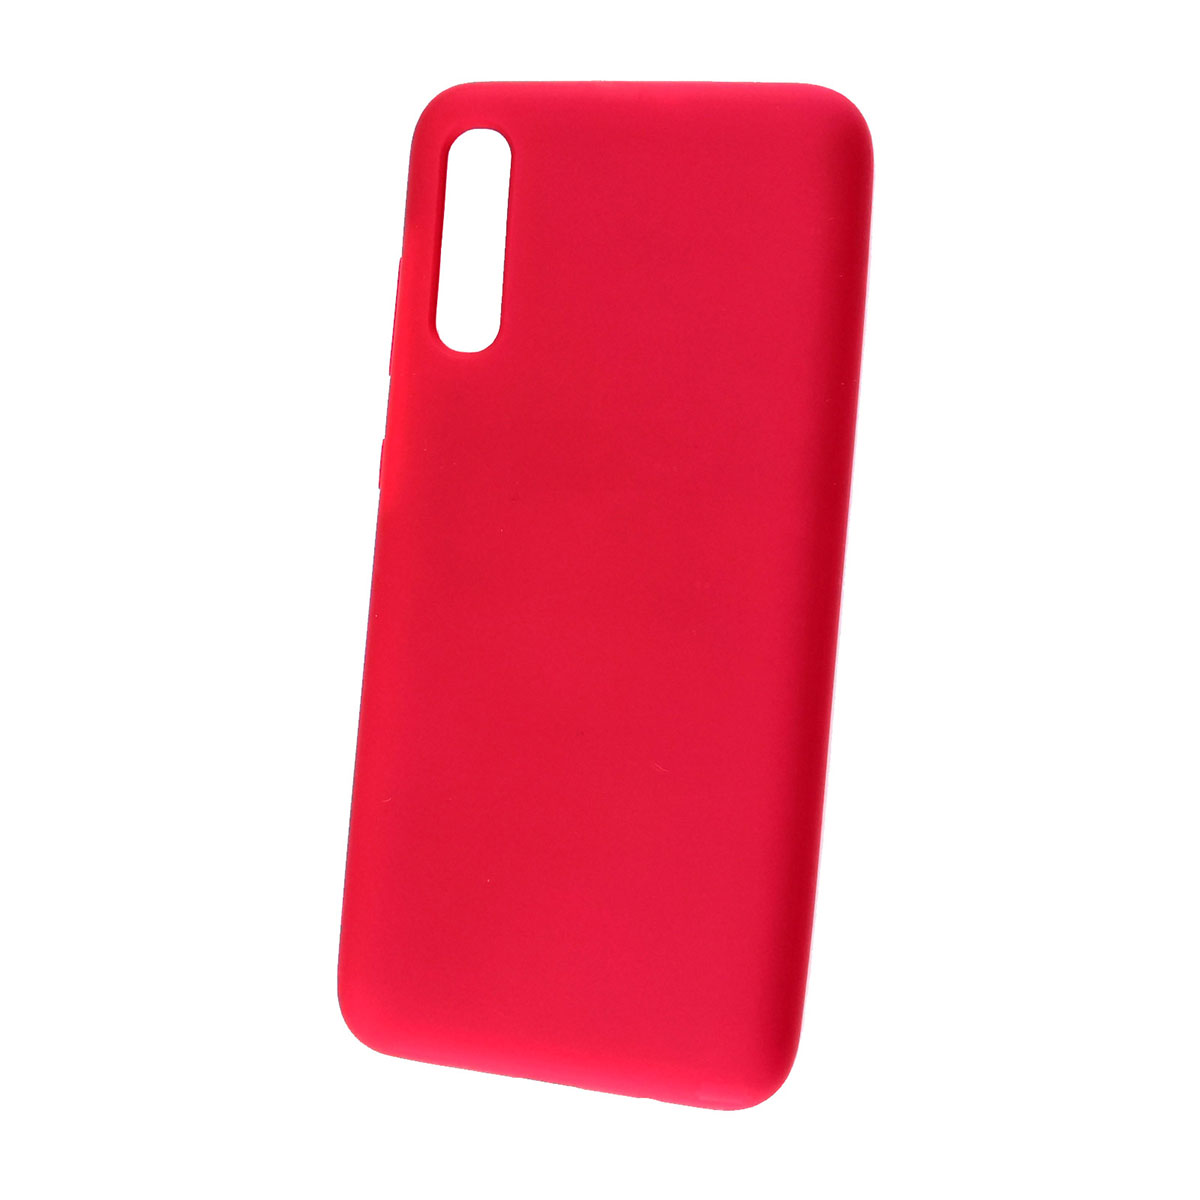 Чехол накладка Silicon Cover для Samsung A70 2019 (SM-A705), силикон, бархат, цвет красный.